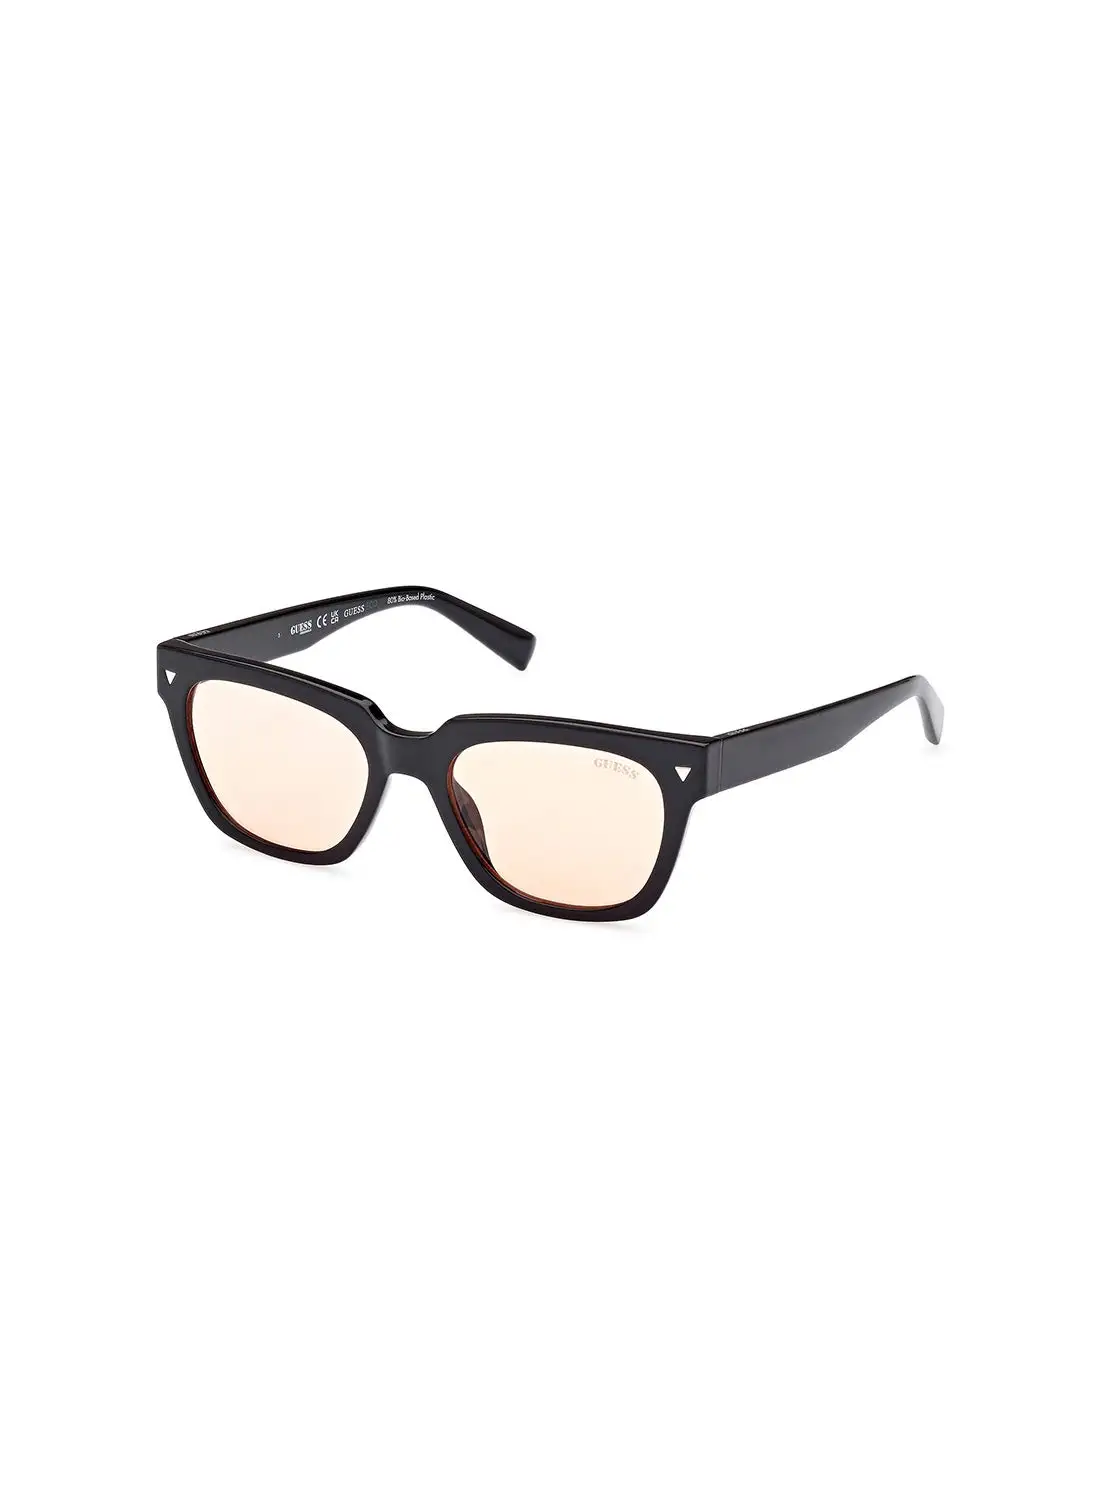 GUESS Men's UV Protection Square Sunglasses - GU826501E53 - Lens Size: 53 Mm